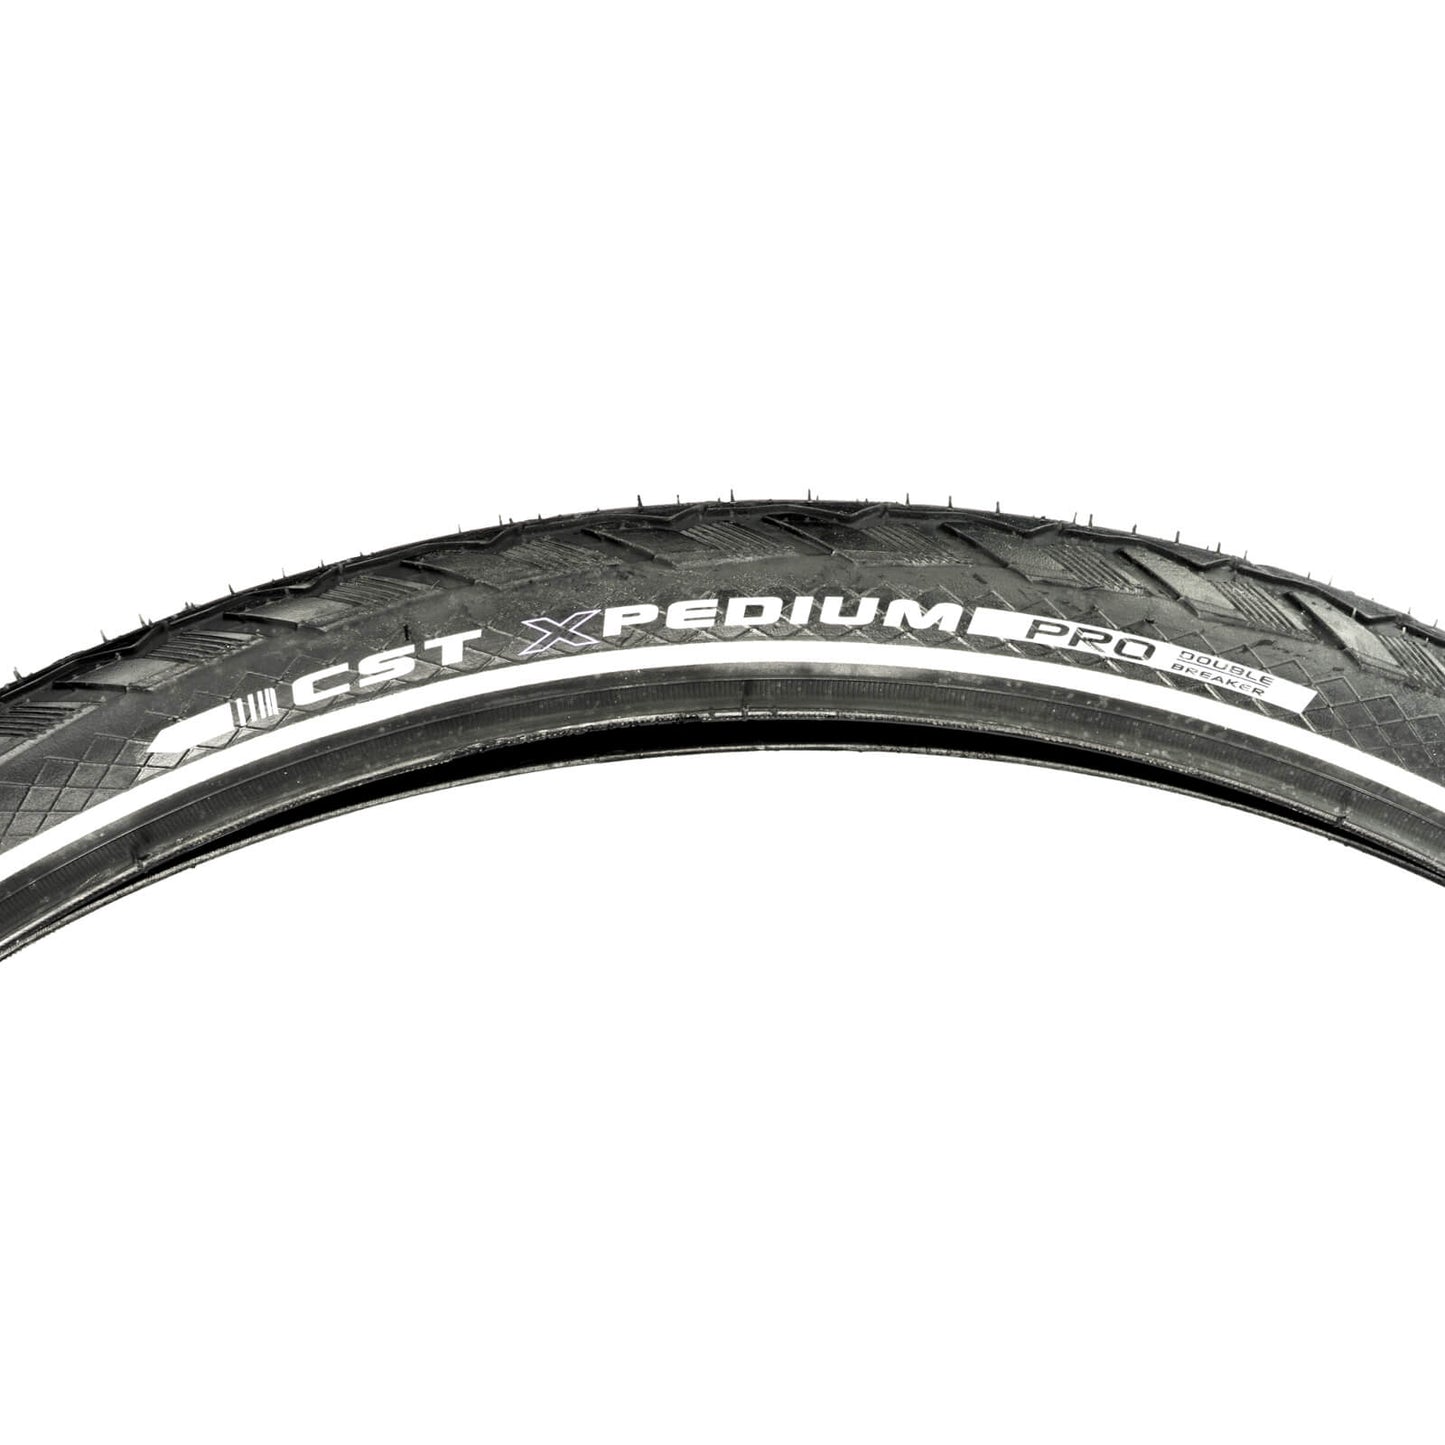 CST Xpedium Level 6 Single Compound Wire DB 700c Clincher Bike Tyre 700x35c